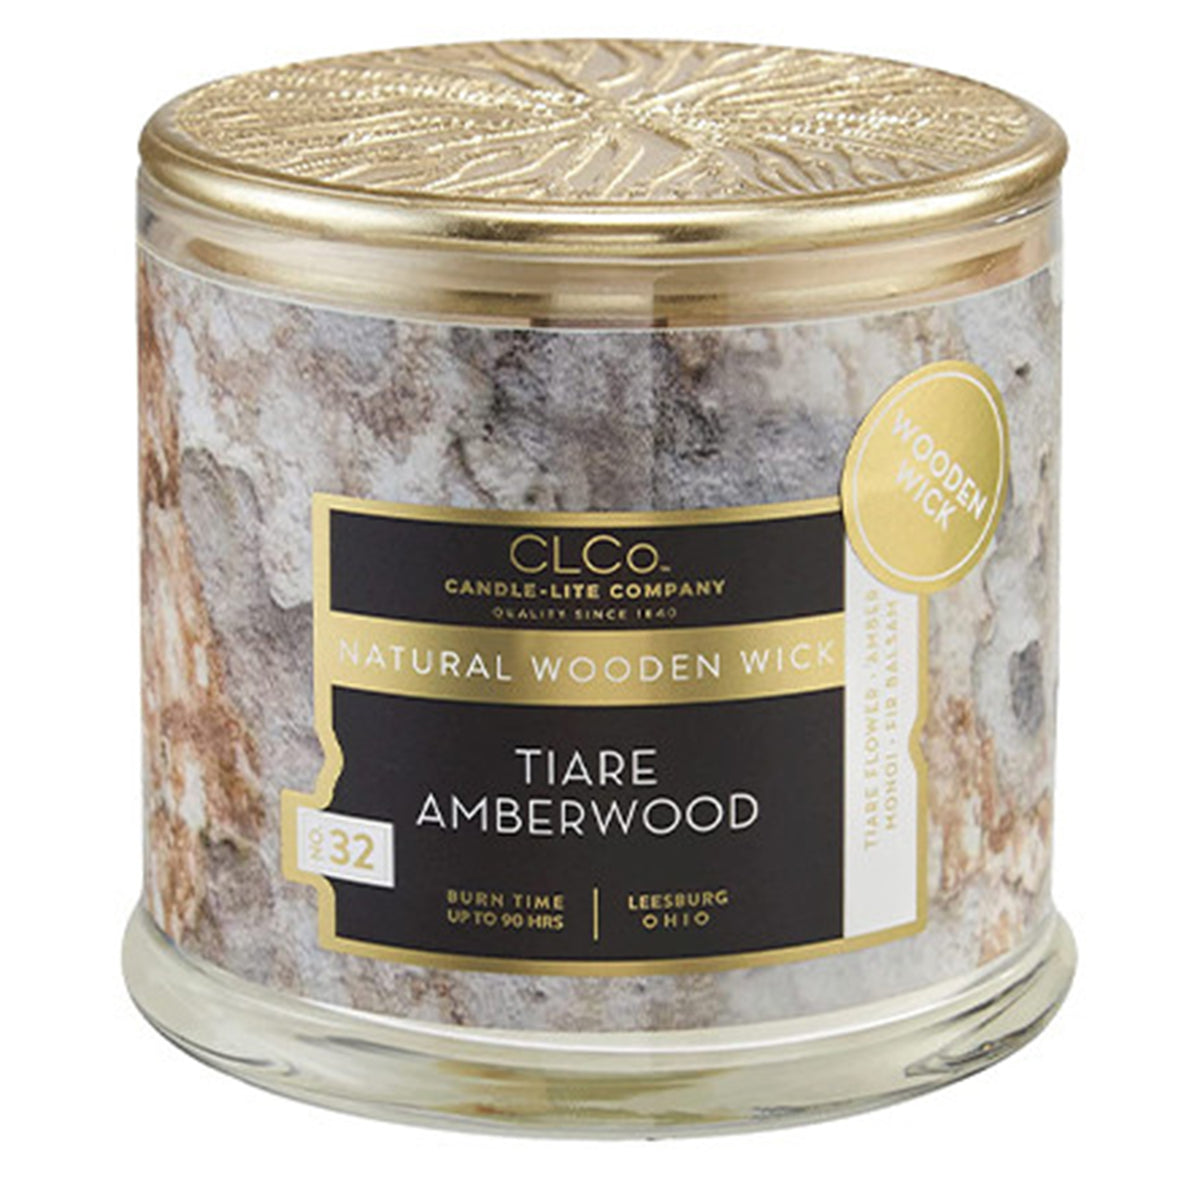 Tiare Amberwood Natural Wooden Wick Glass Jar Candle